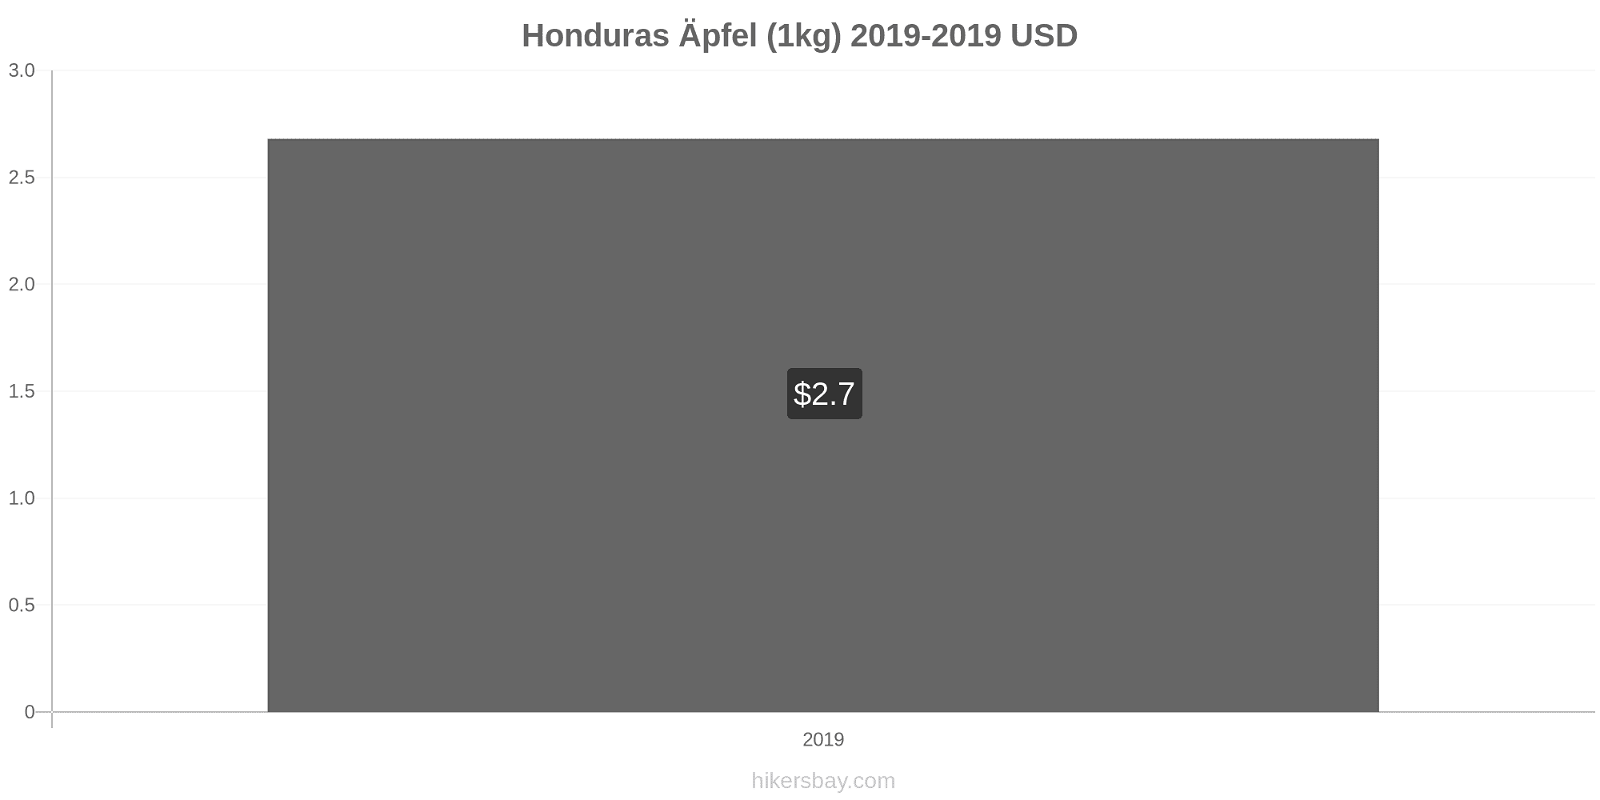 Honduras Preisänderungen Äpfel (1kg) hikersbay.com